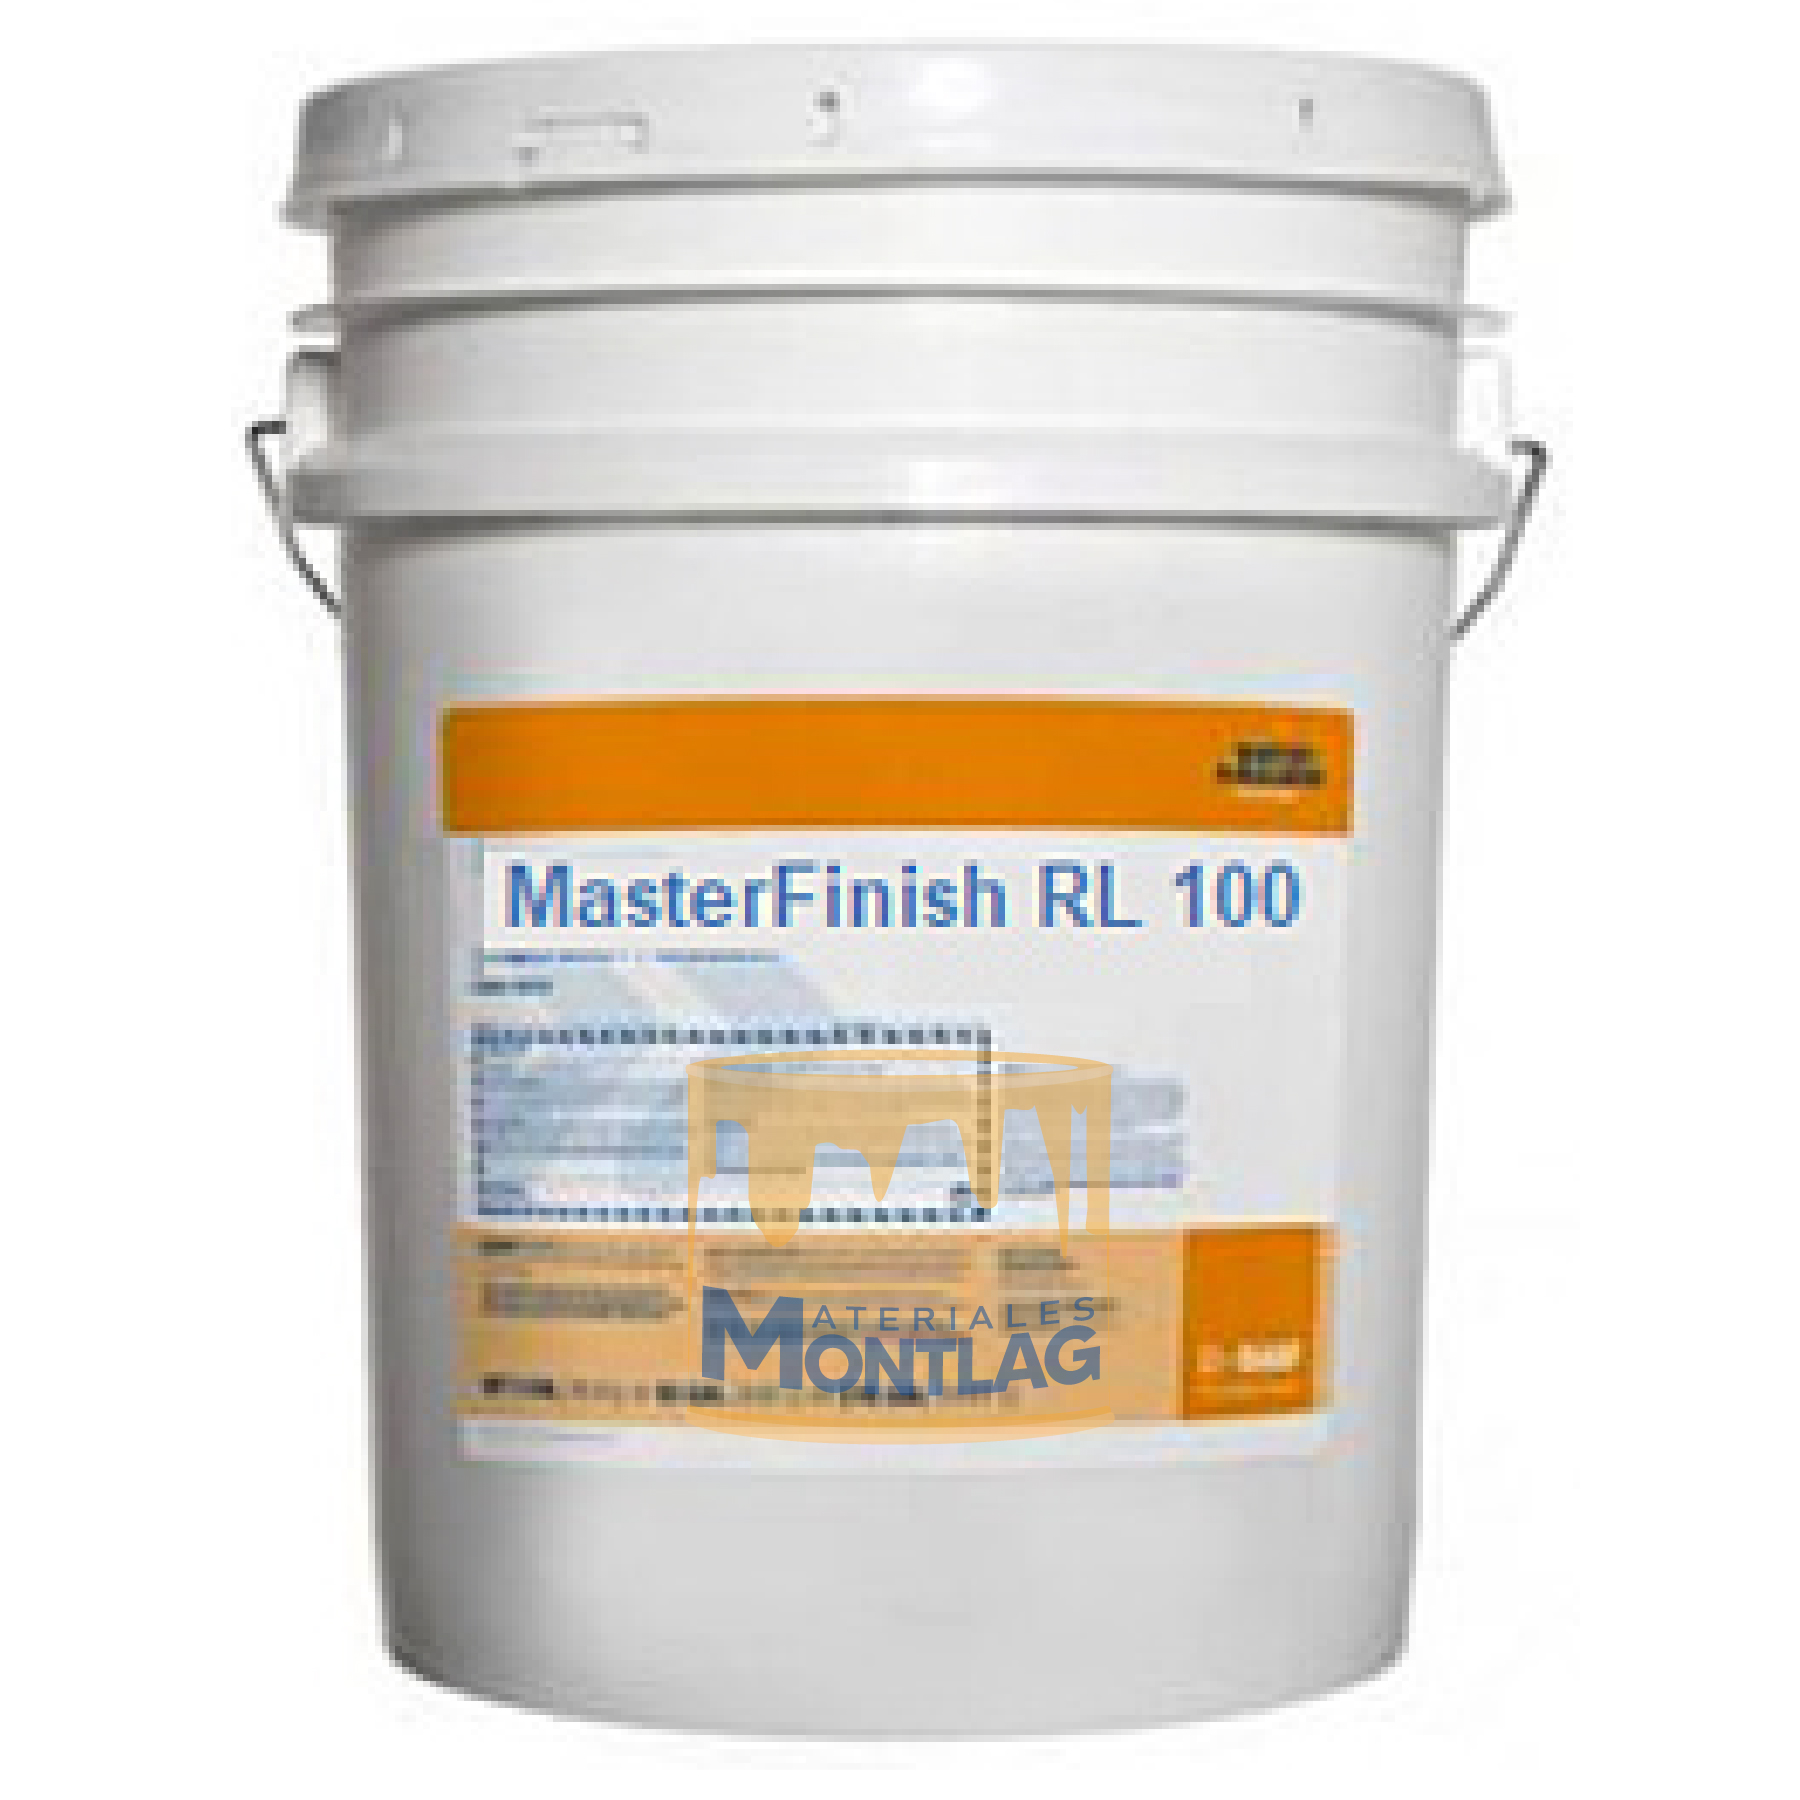 Materiales Montlag - MasterFinish RL 100 19Lts.